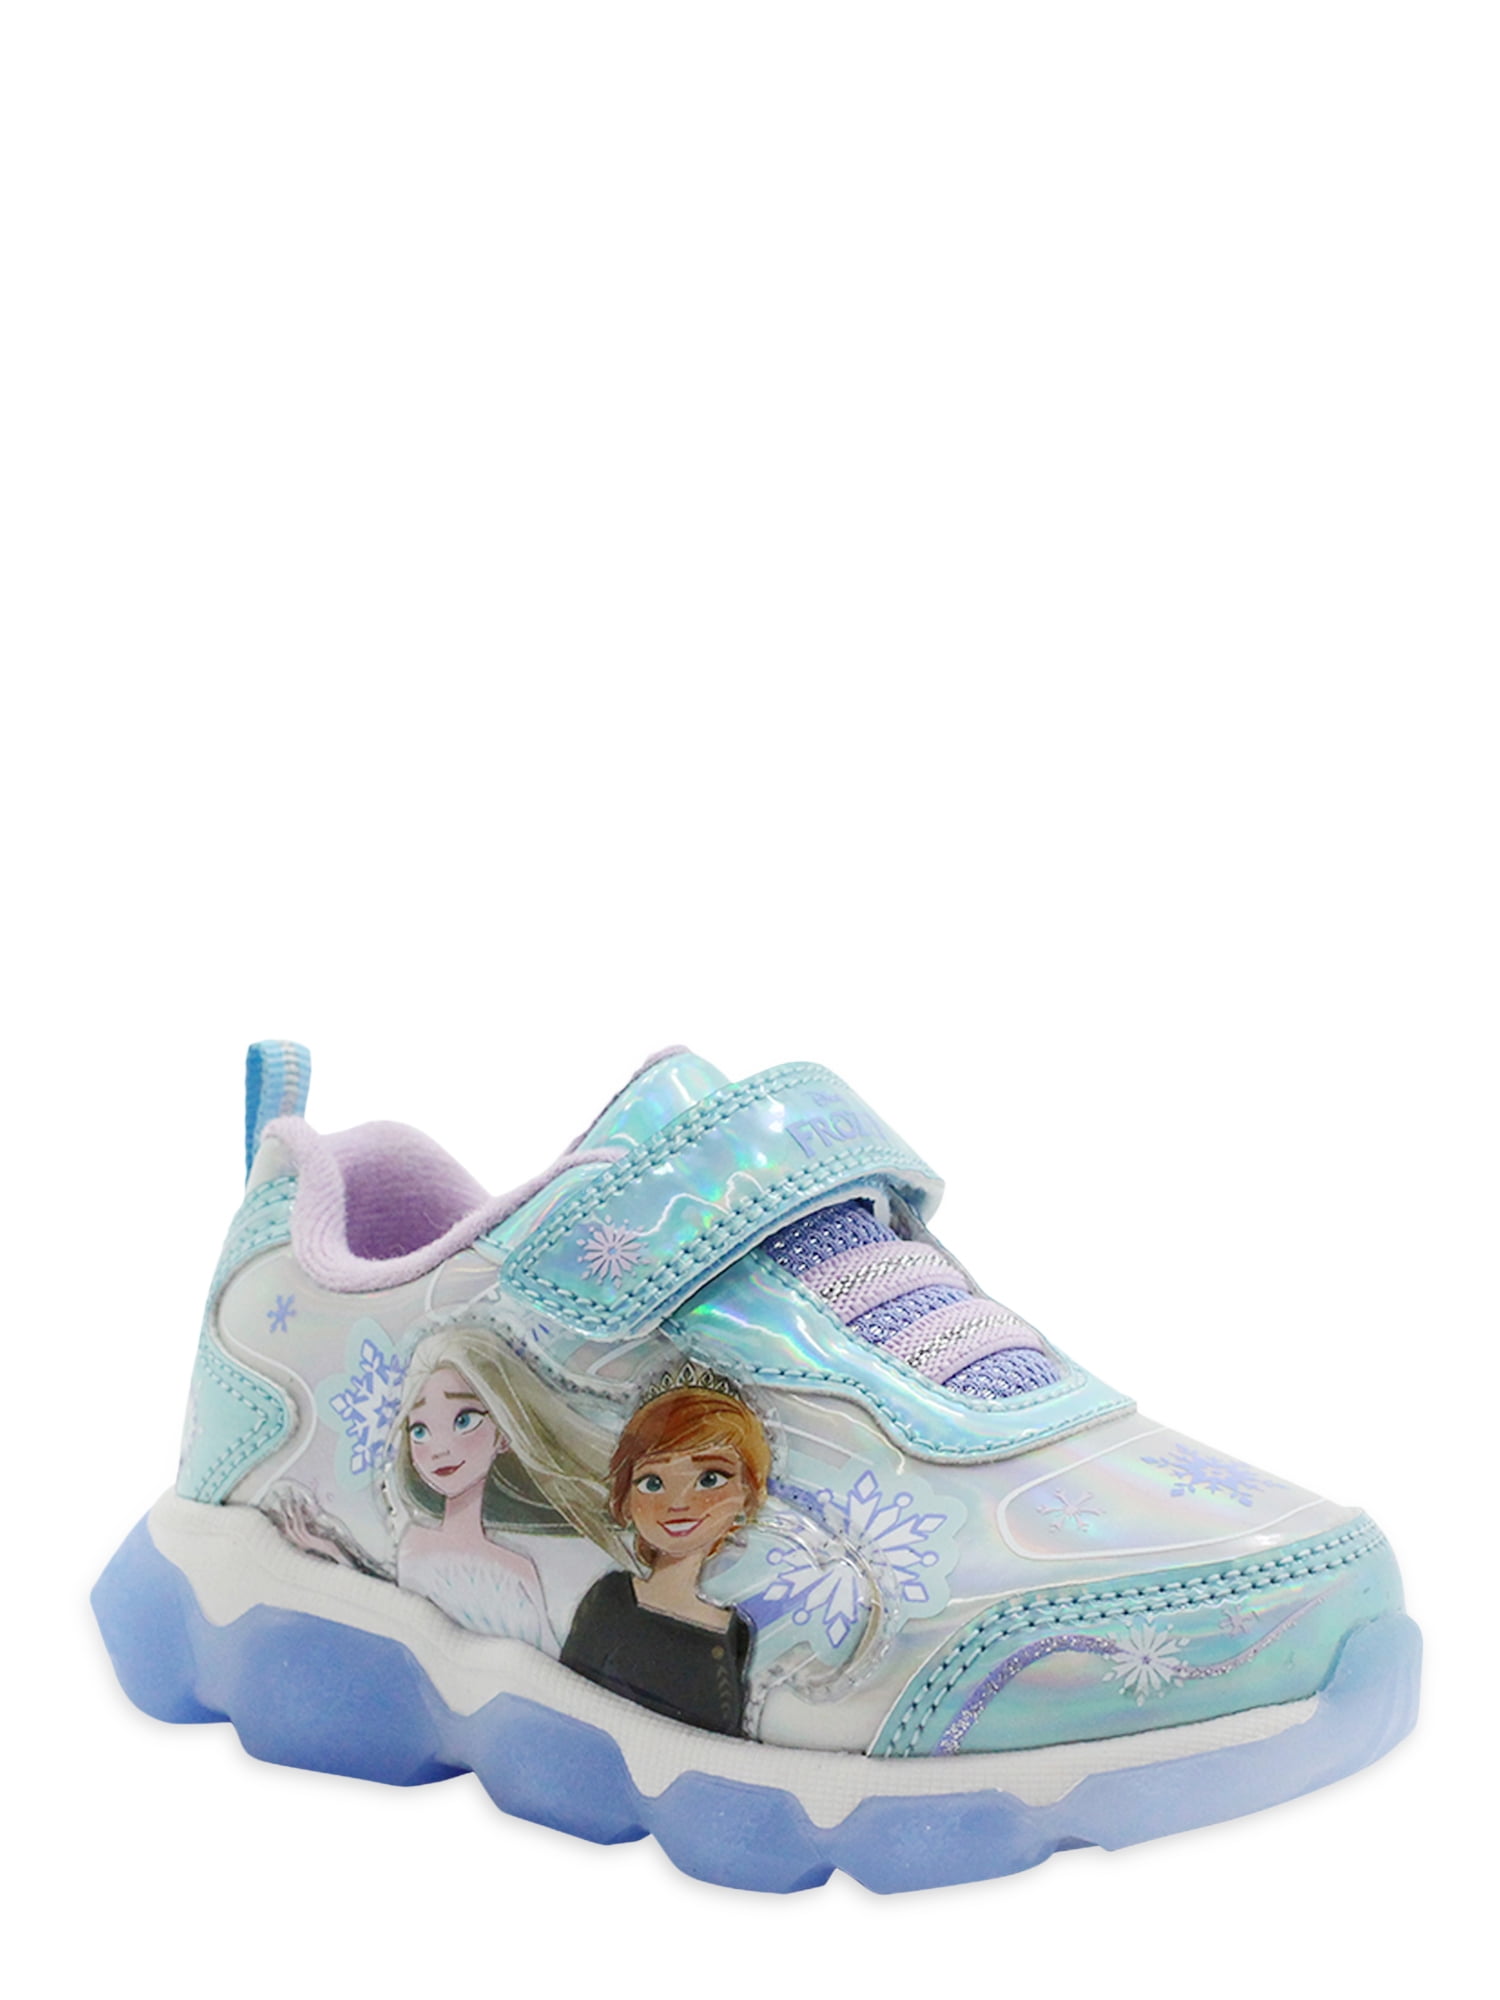 Disney Frozen 2 Toddler Girls Blue Light Up Shoes Size 12 Anna And Elsa 